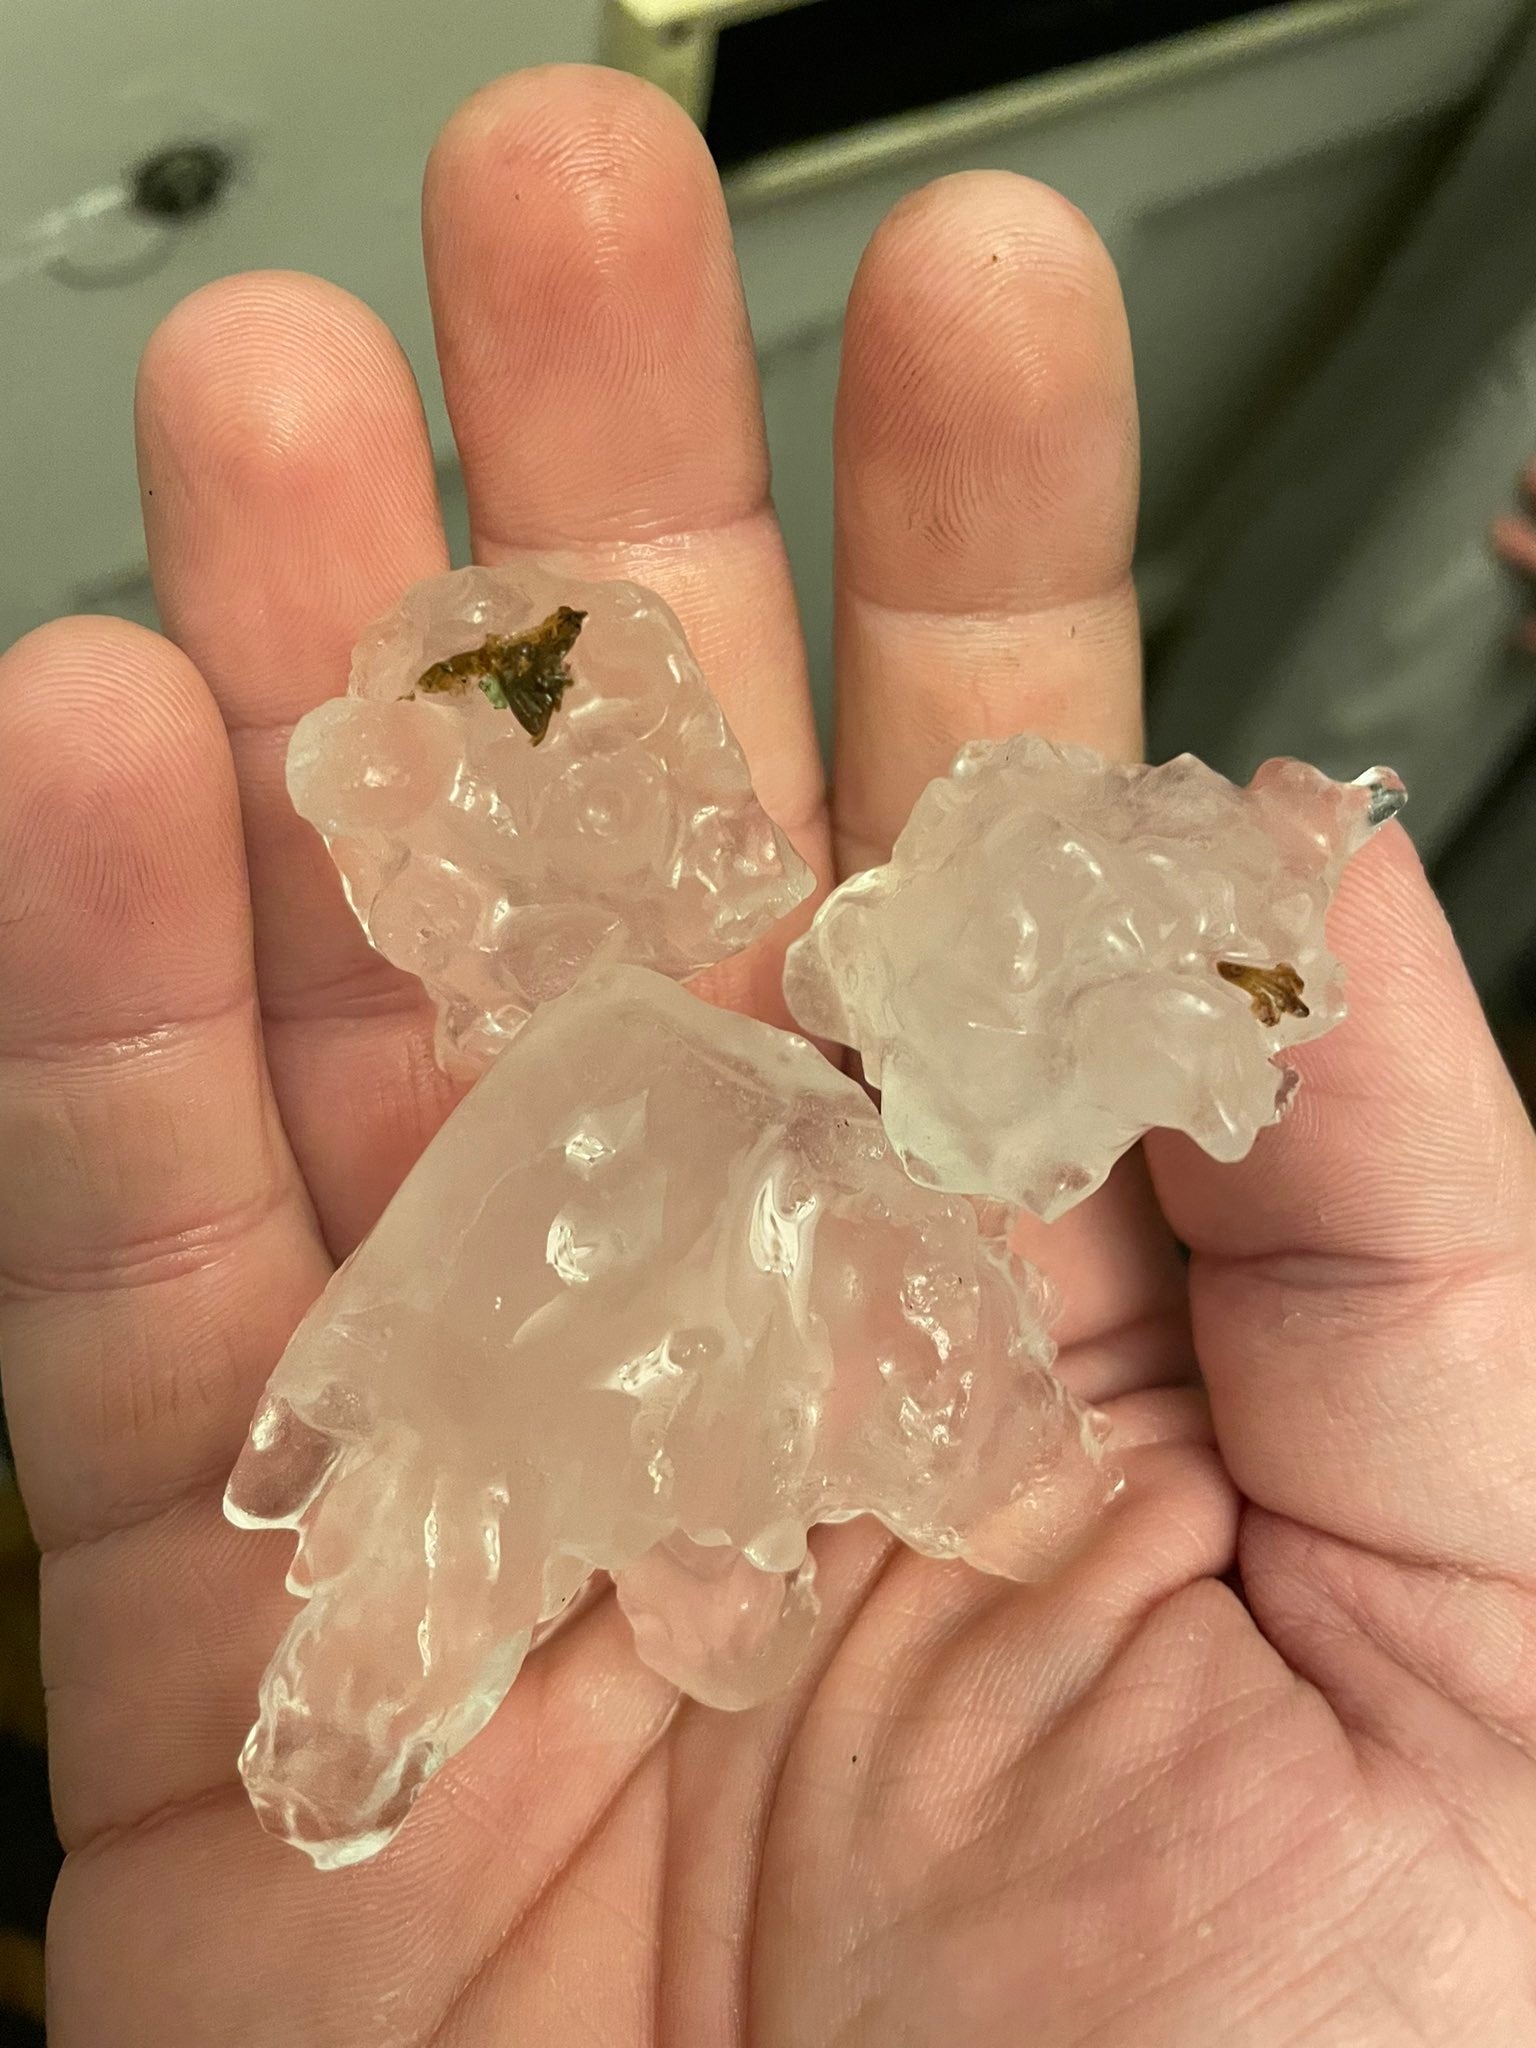 Carl Walker said golf ball-sized hailstones rained down across the island on Wednesday night